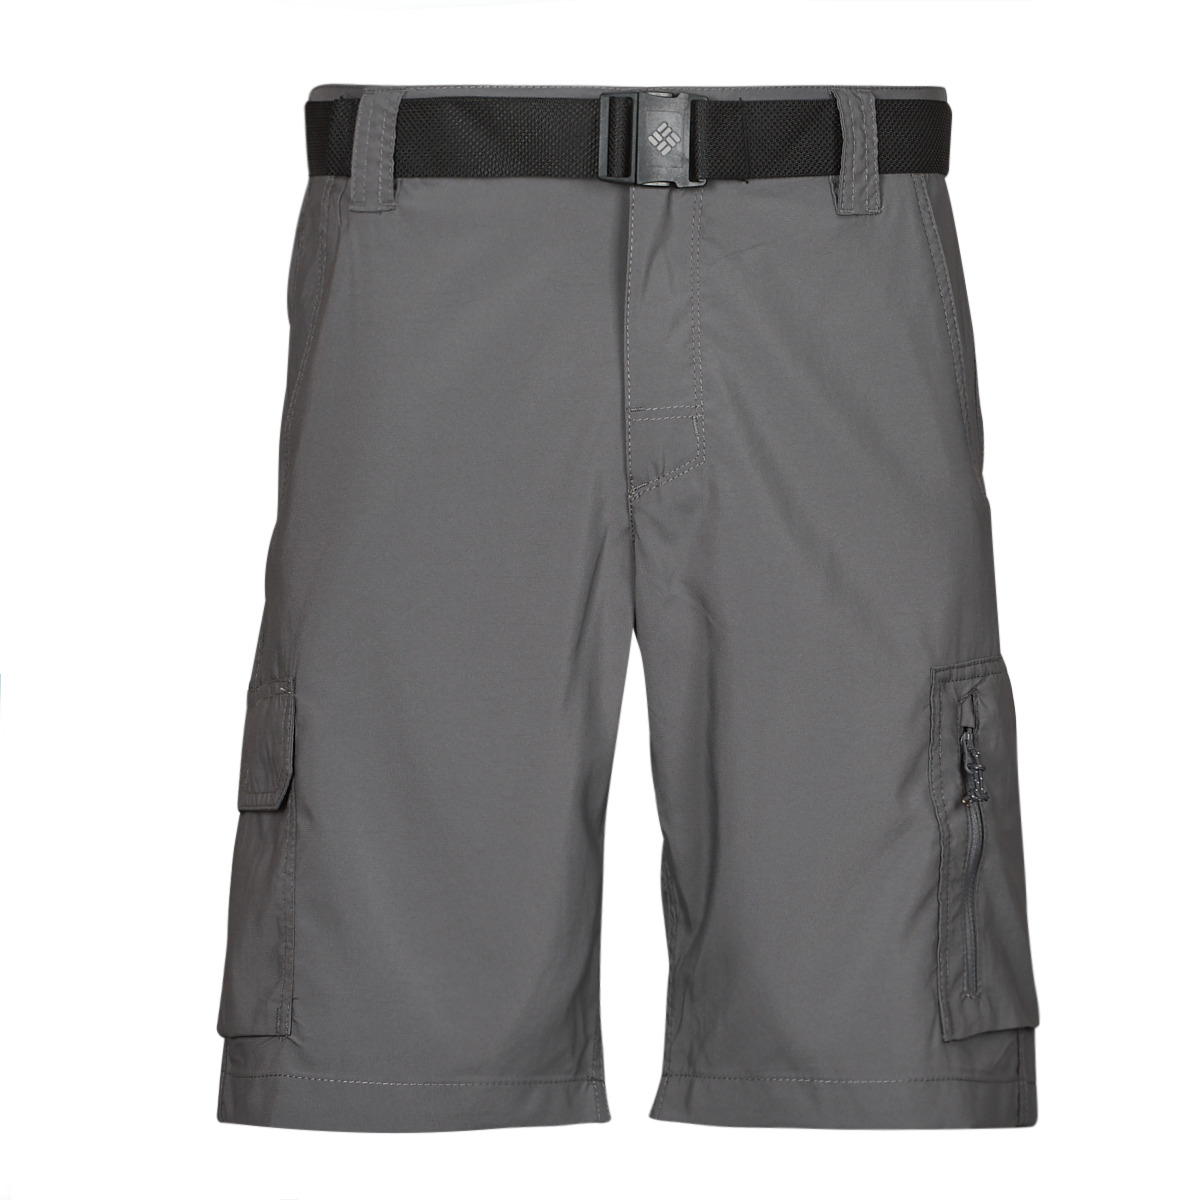 Abbigliamento Uomo Shorts / Bermuda Columbia Silver Ridge Utility Cargo Short Grigio